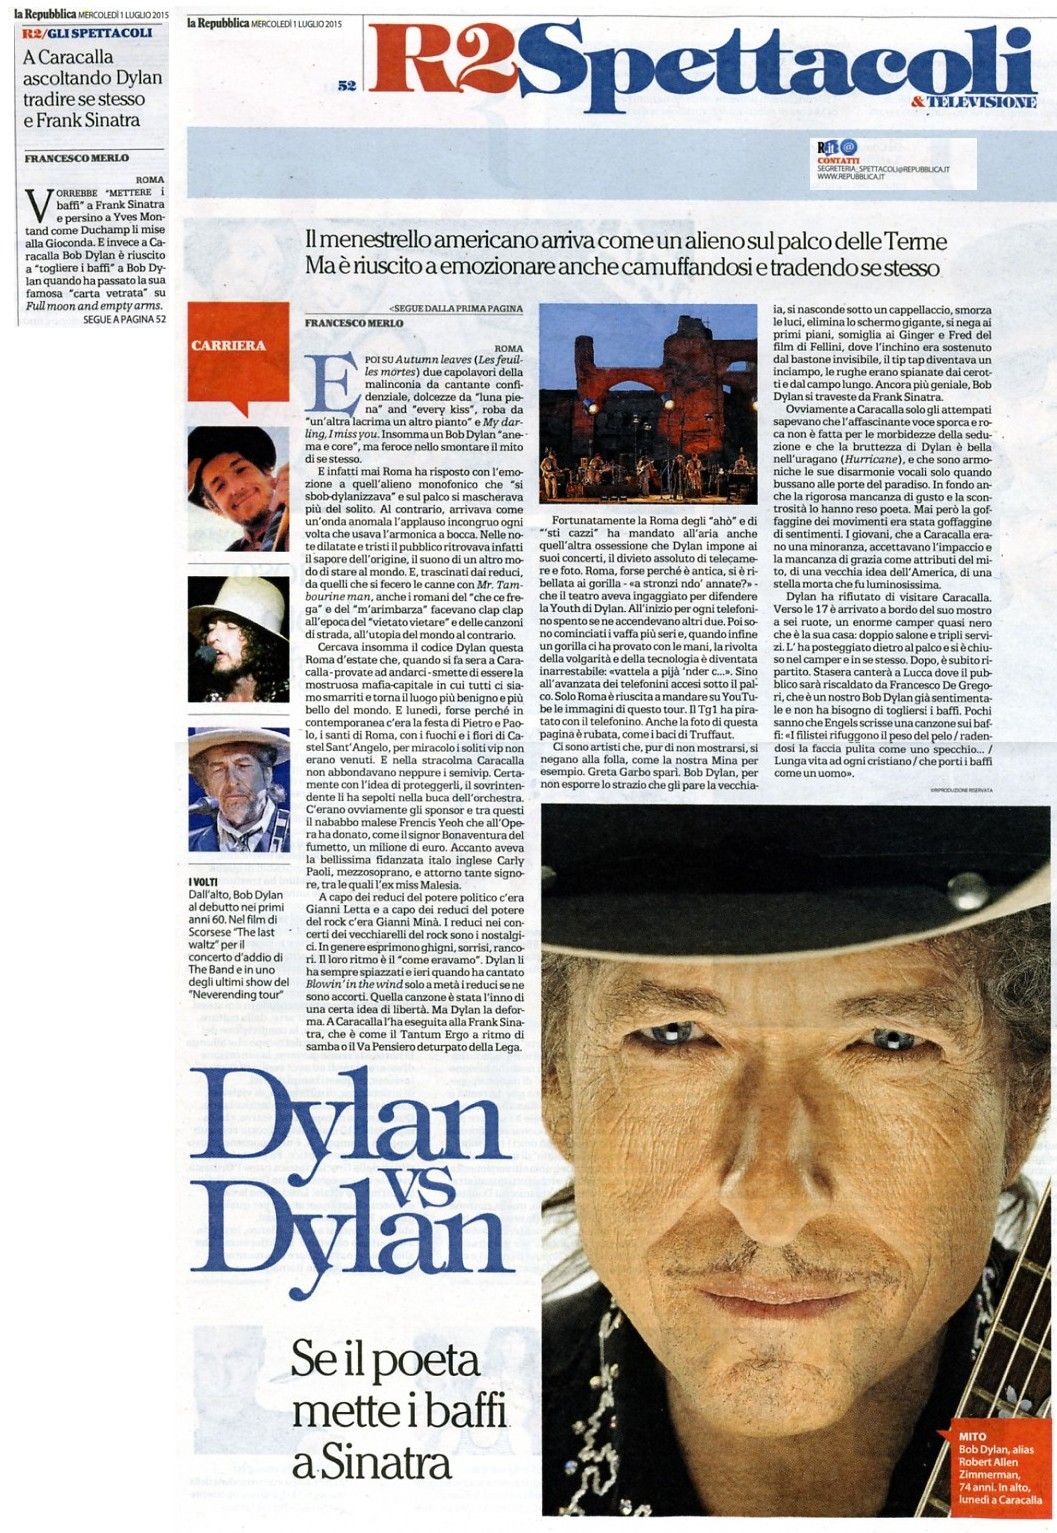 la repubblica 1 june 2015 Bob Dylan cover story